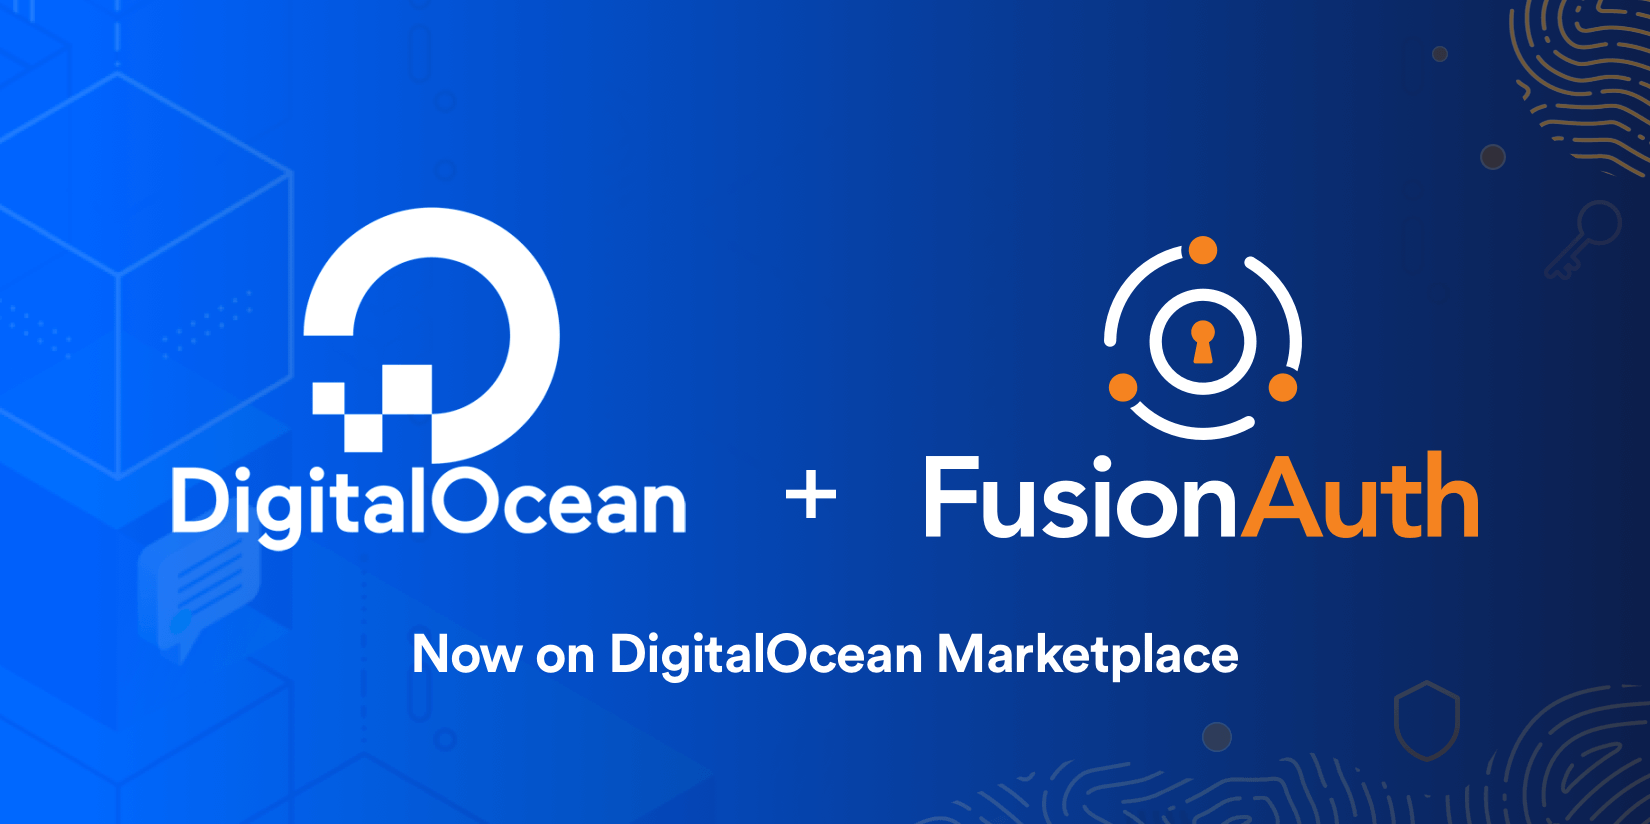 FusionAuth launches in the DigitalOcean marketplace